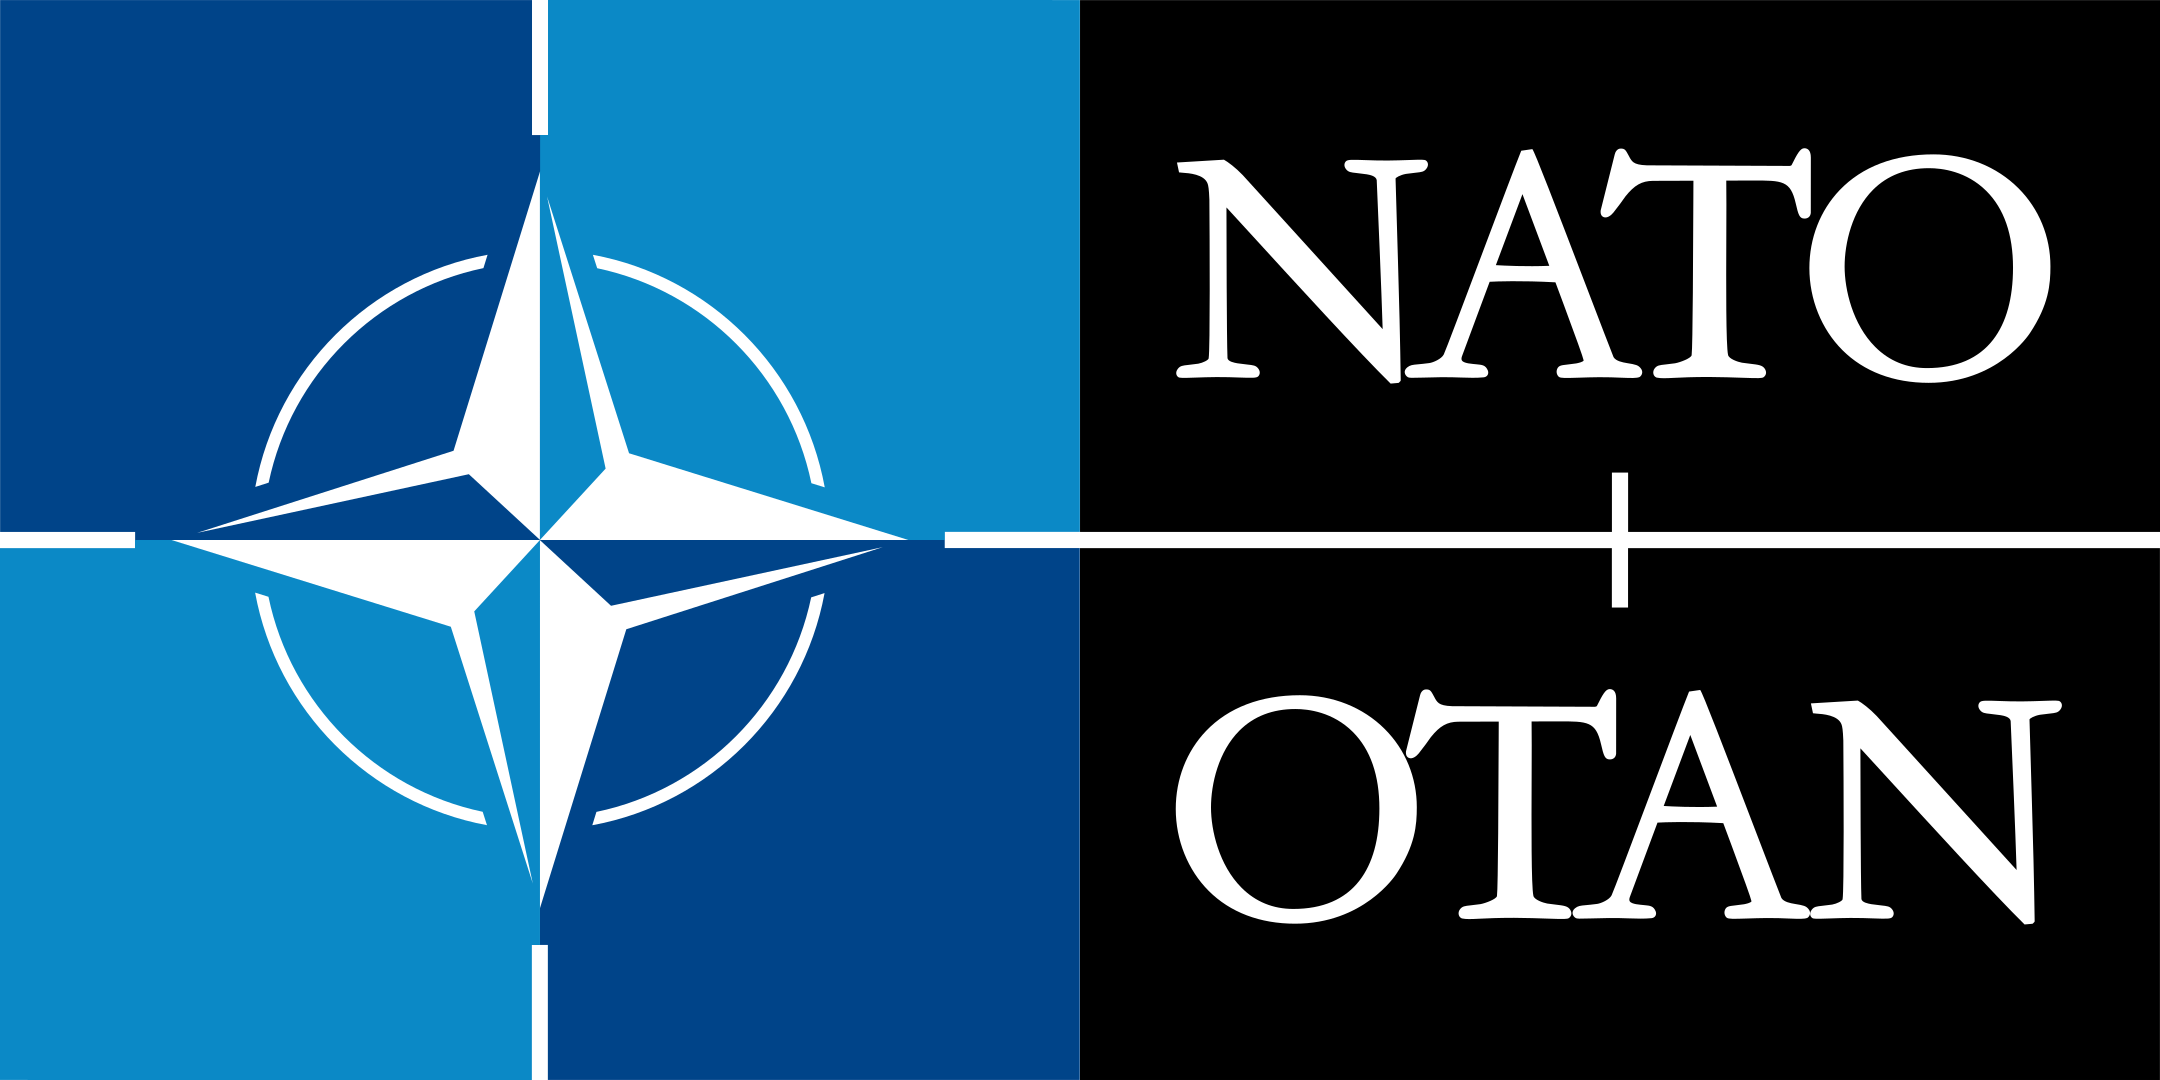 nato otan logo 1 - Otan Logo - Nato Logo